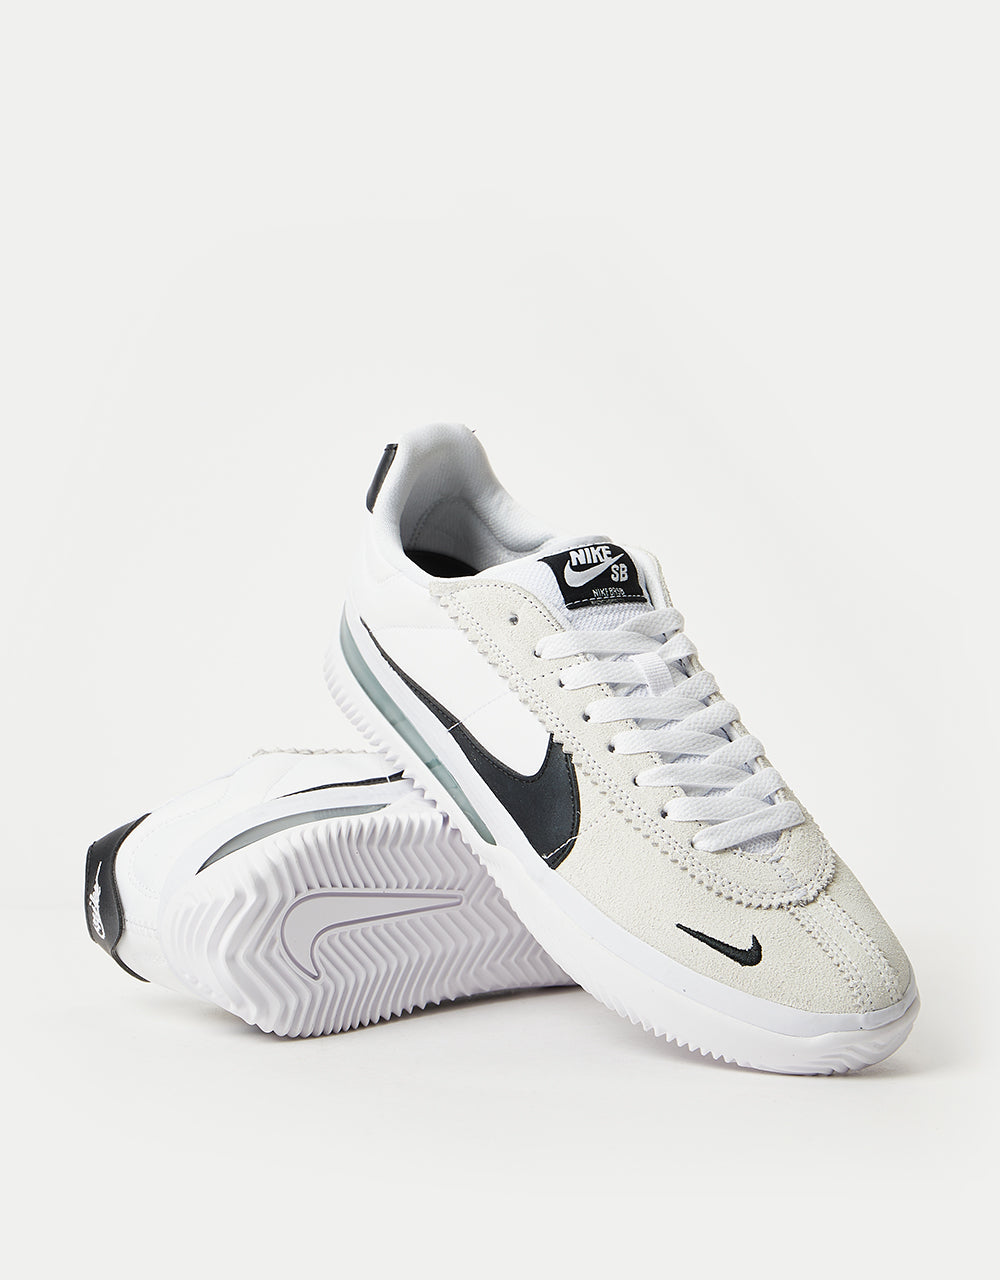 Nike SB BRSB Eco Skate Shoes - White/Black-White-Black